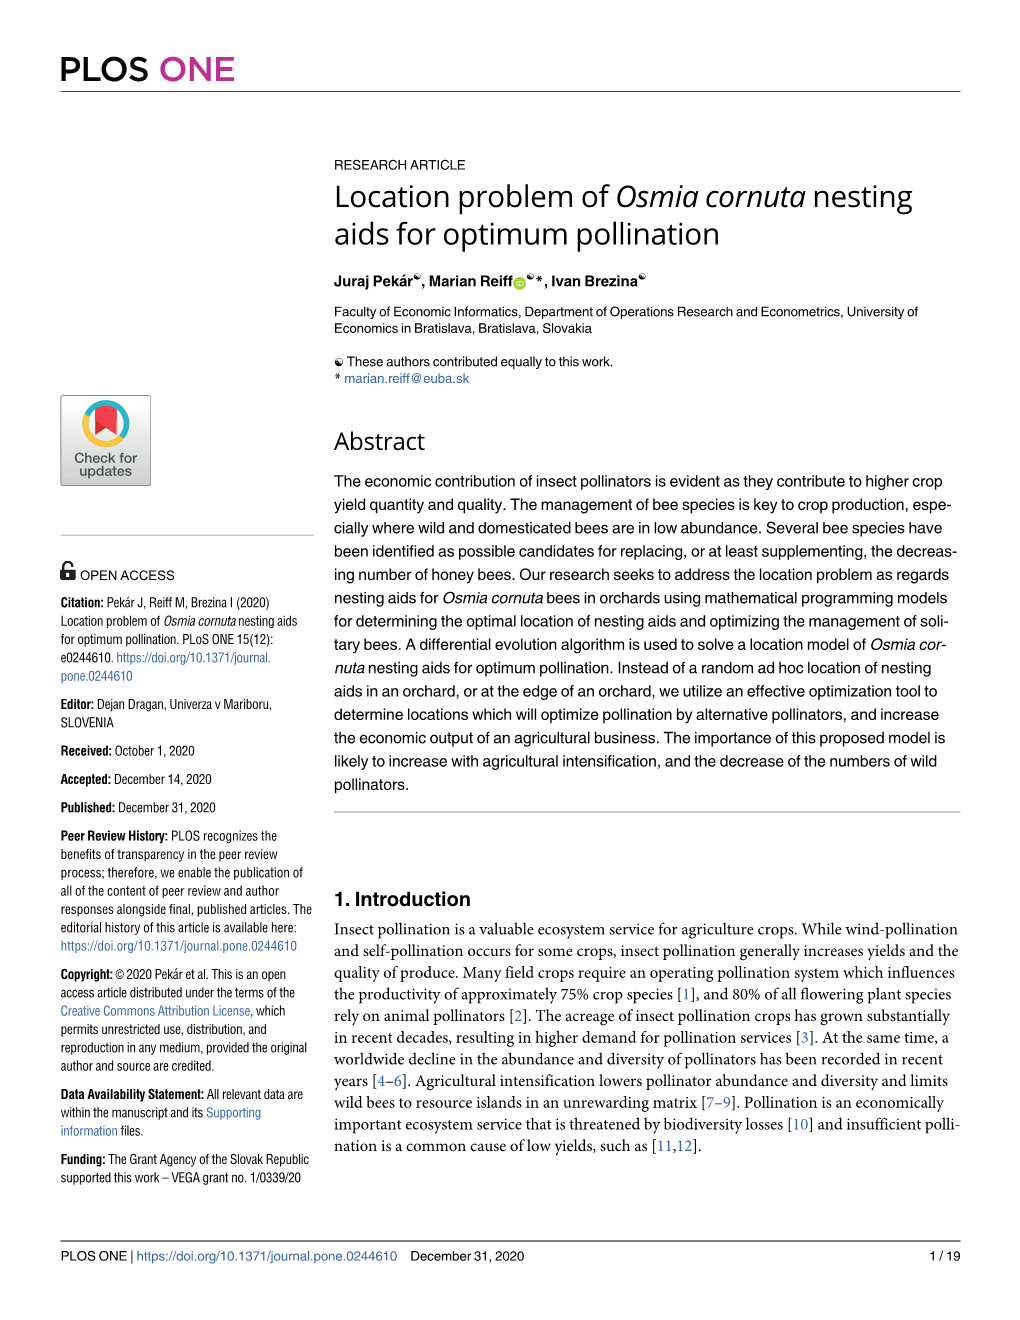 Location Problem of Osmia Cornuta Nesting Aids for Optimum Pollination